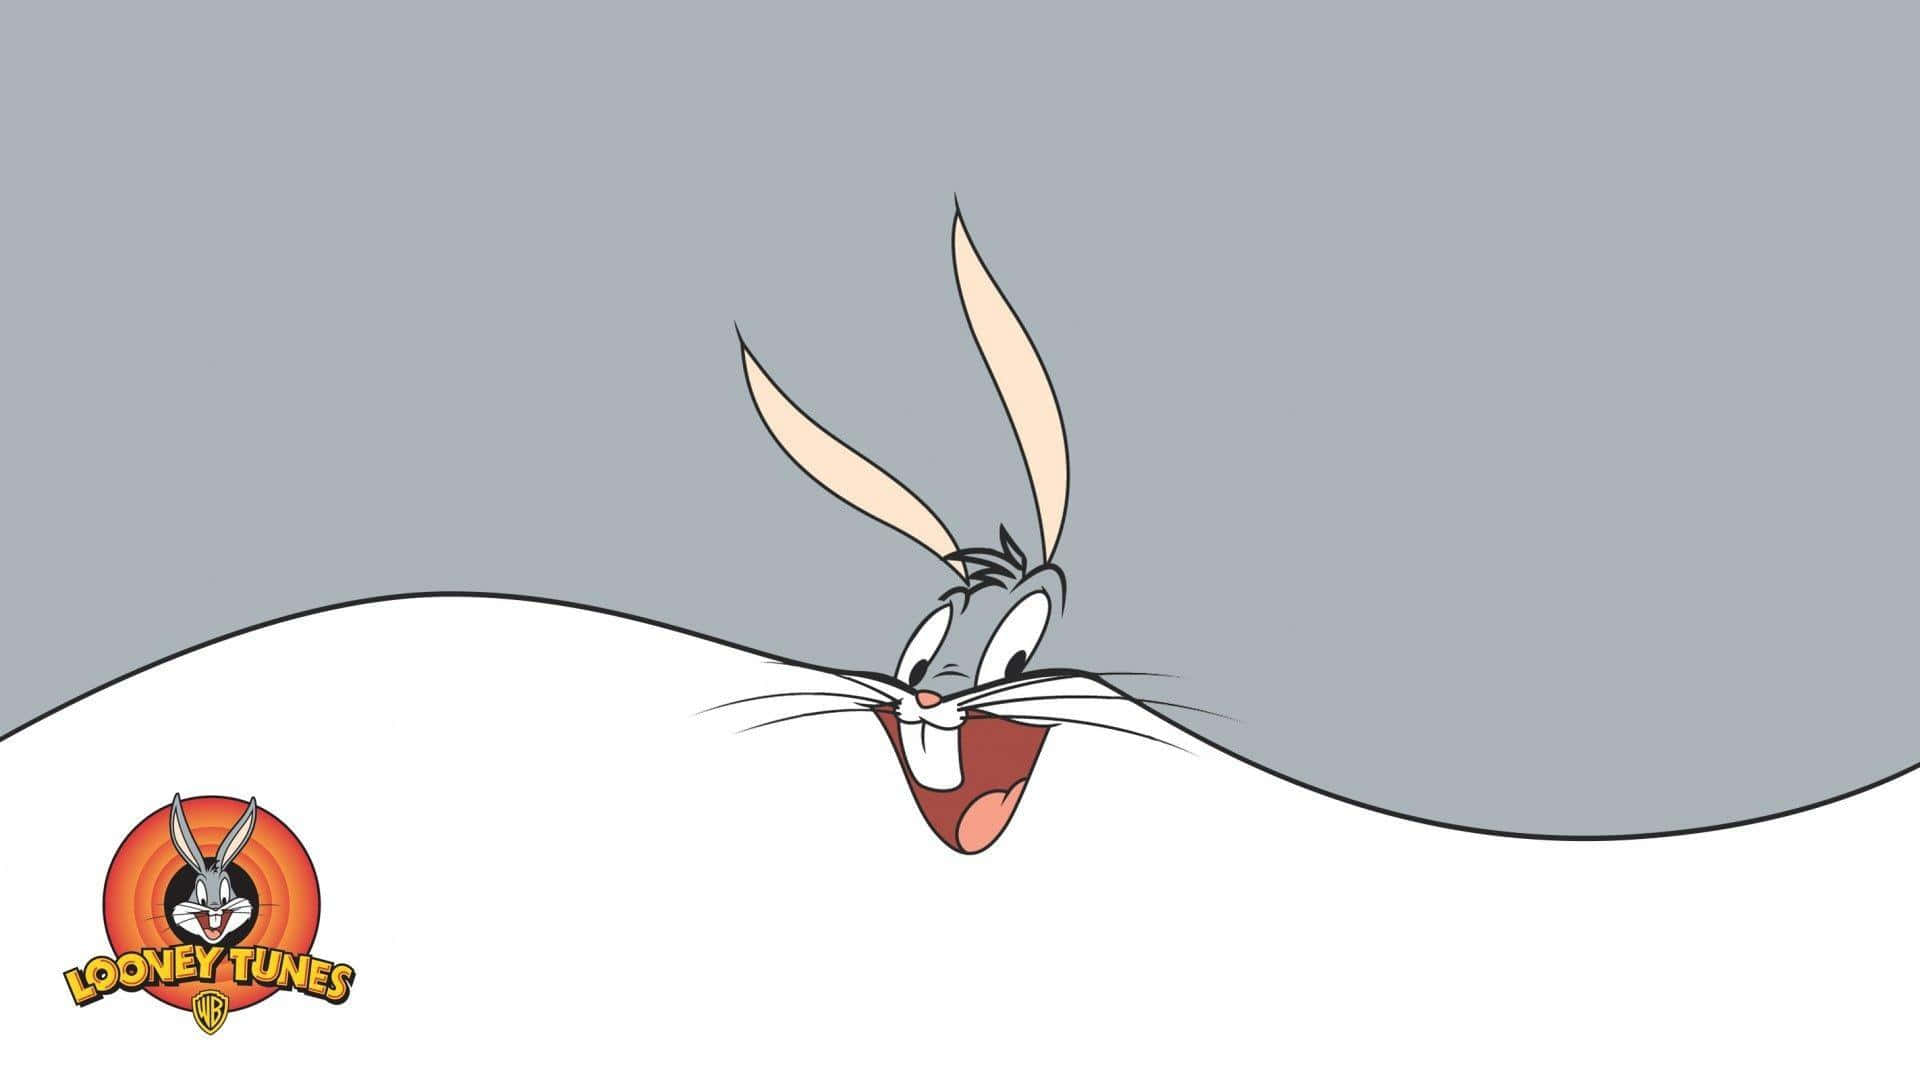 Everyone's Favorite Bunny - Bugs Bunny!